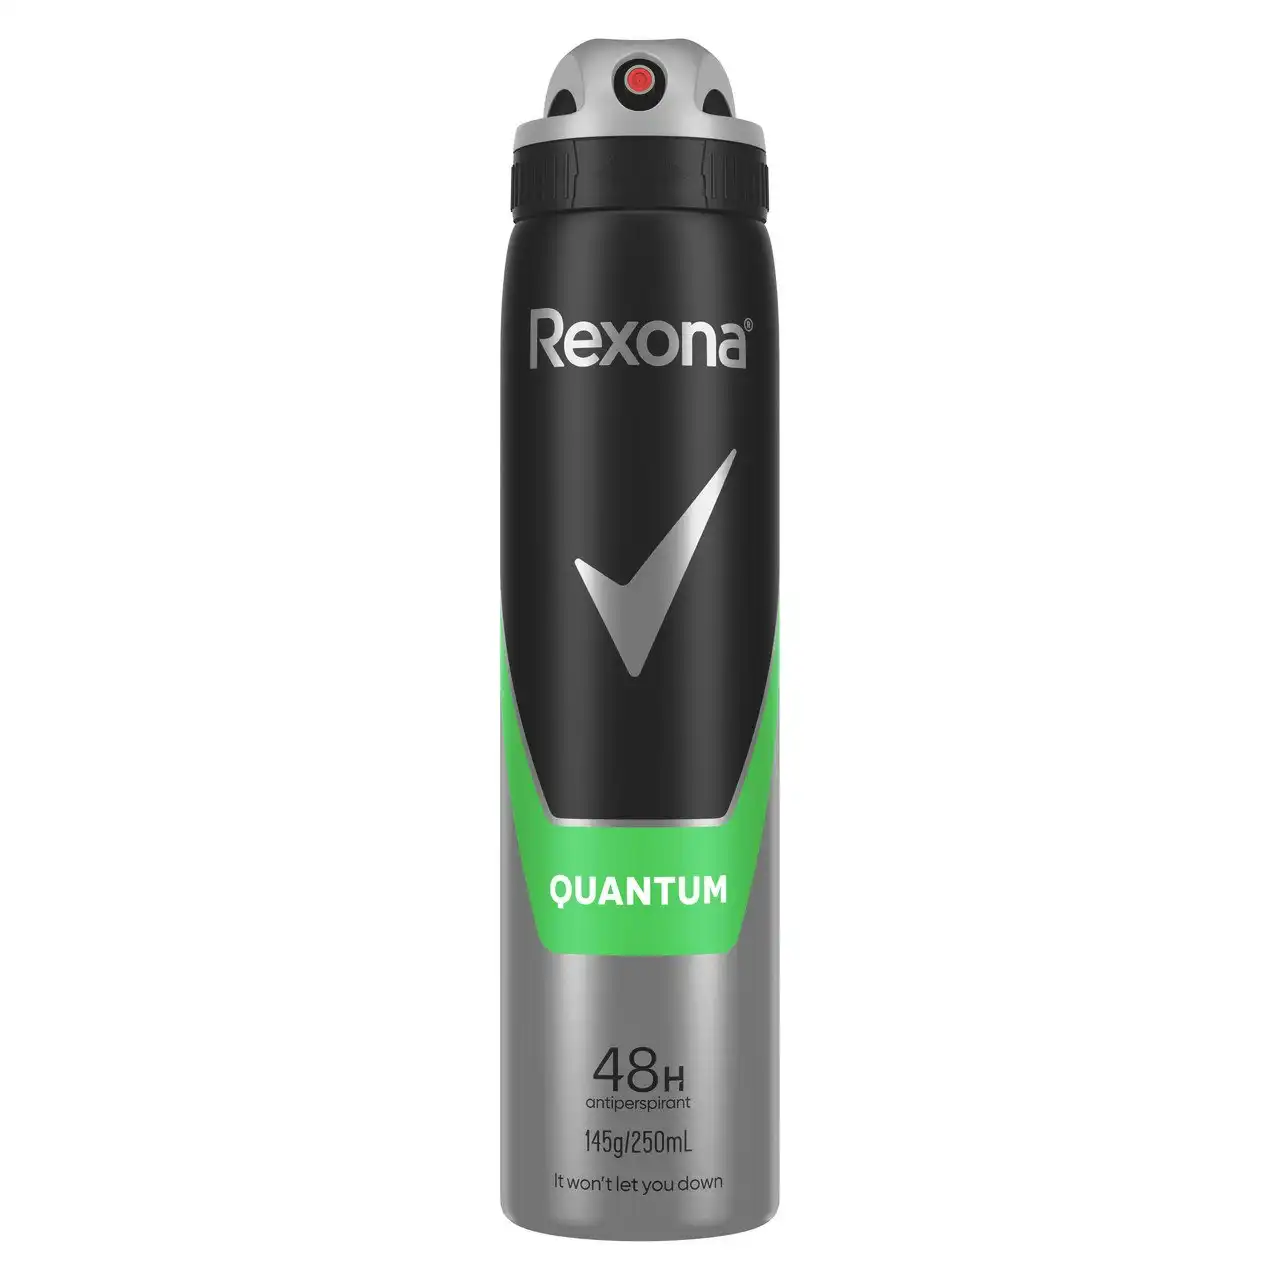 Rexona Men Antiperspirant Aerosol Deodorant Quantum with Antibacterial Protection 250mL 1